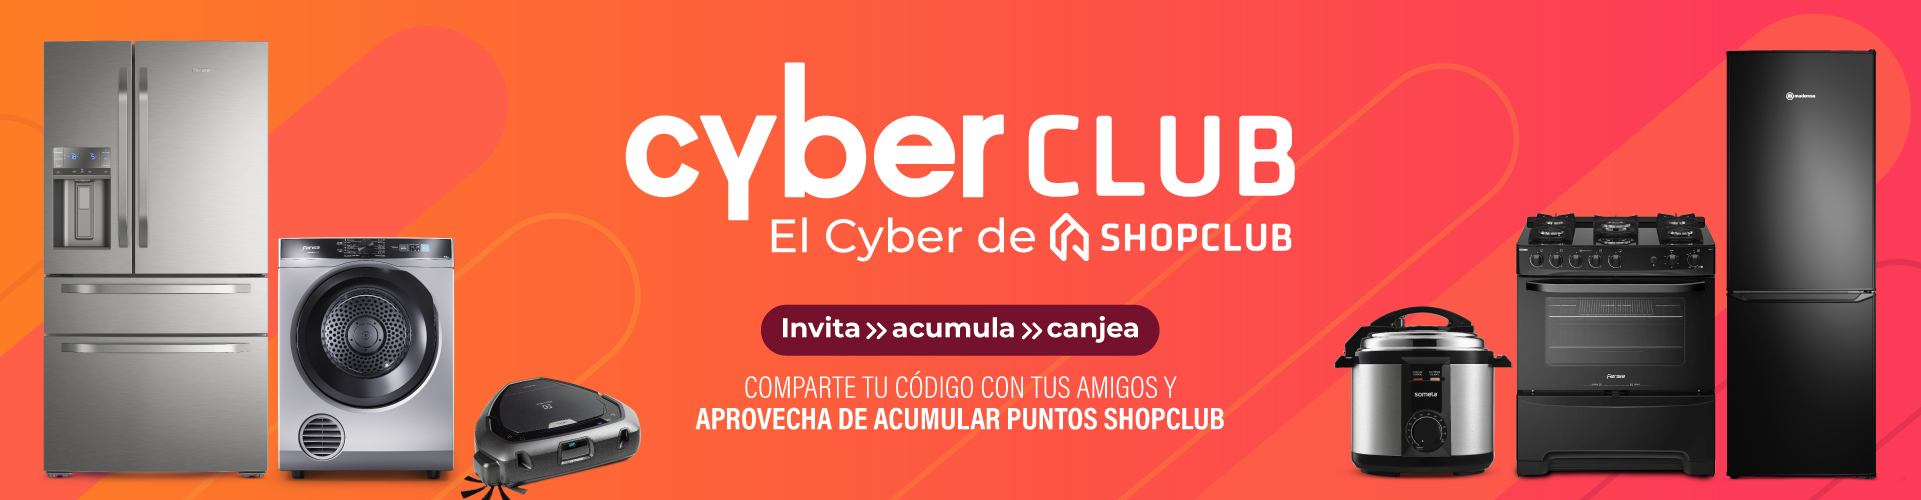 shop sale - cyber